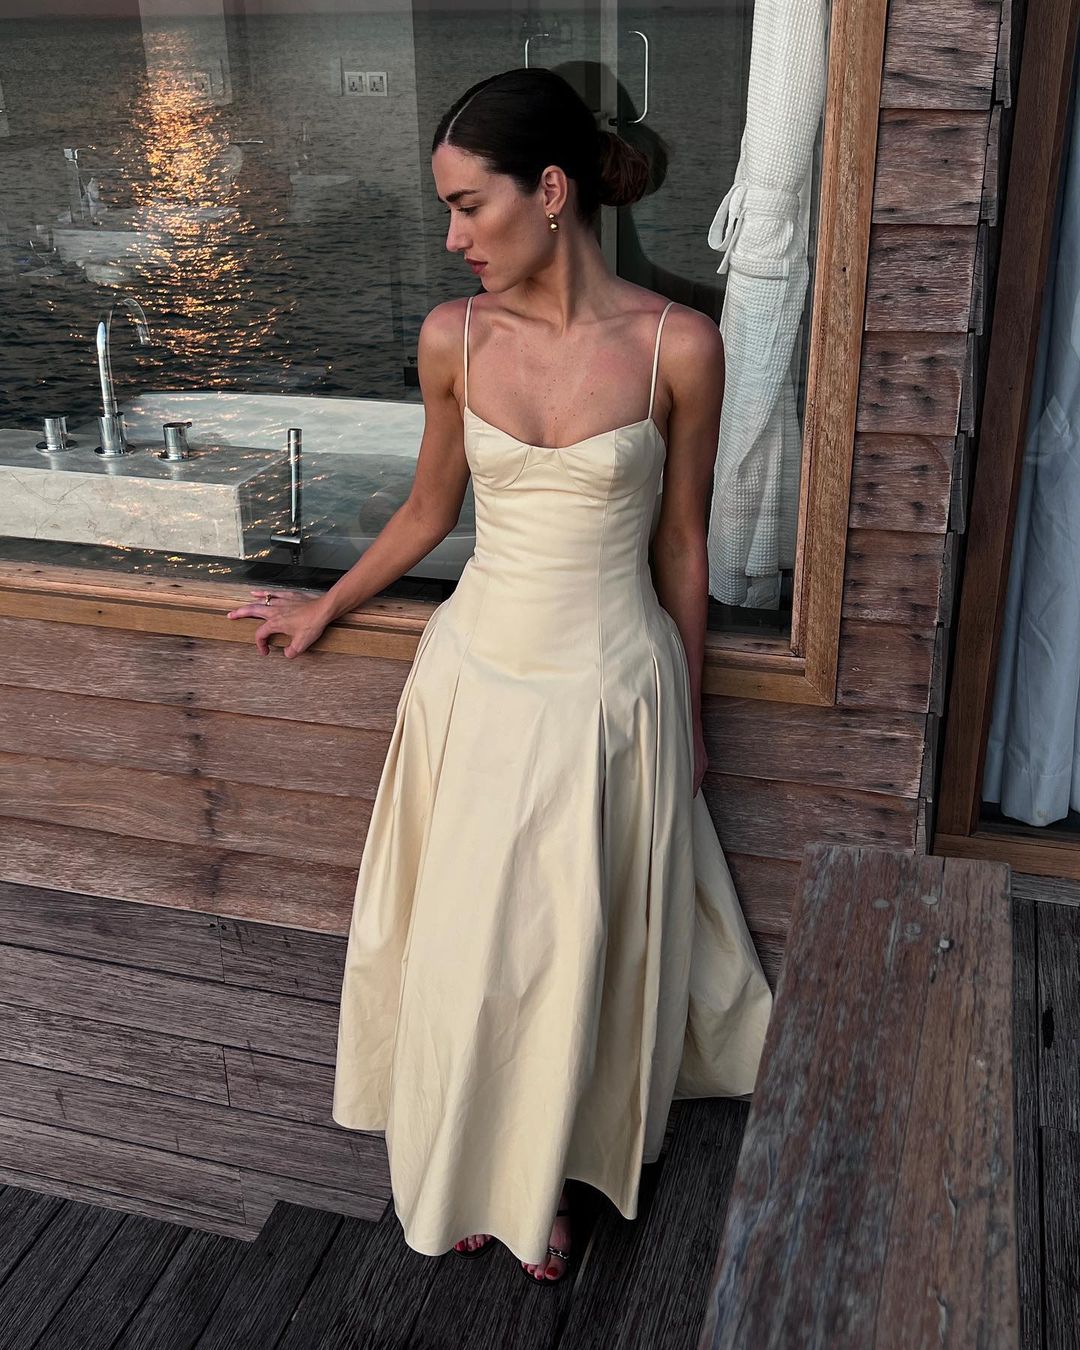 Elegant Summer Style: @iliridakrasniqi wears a light yellow basque waistline dress